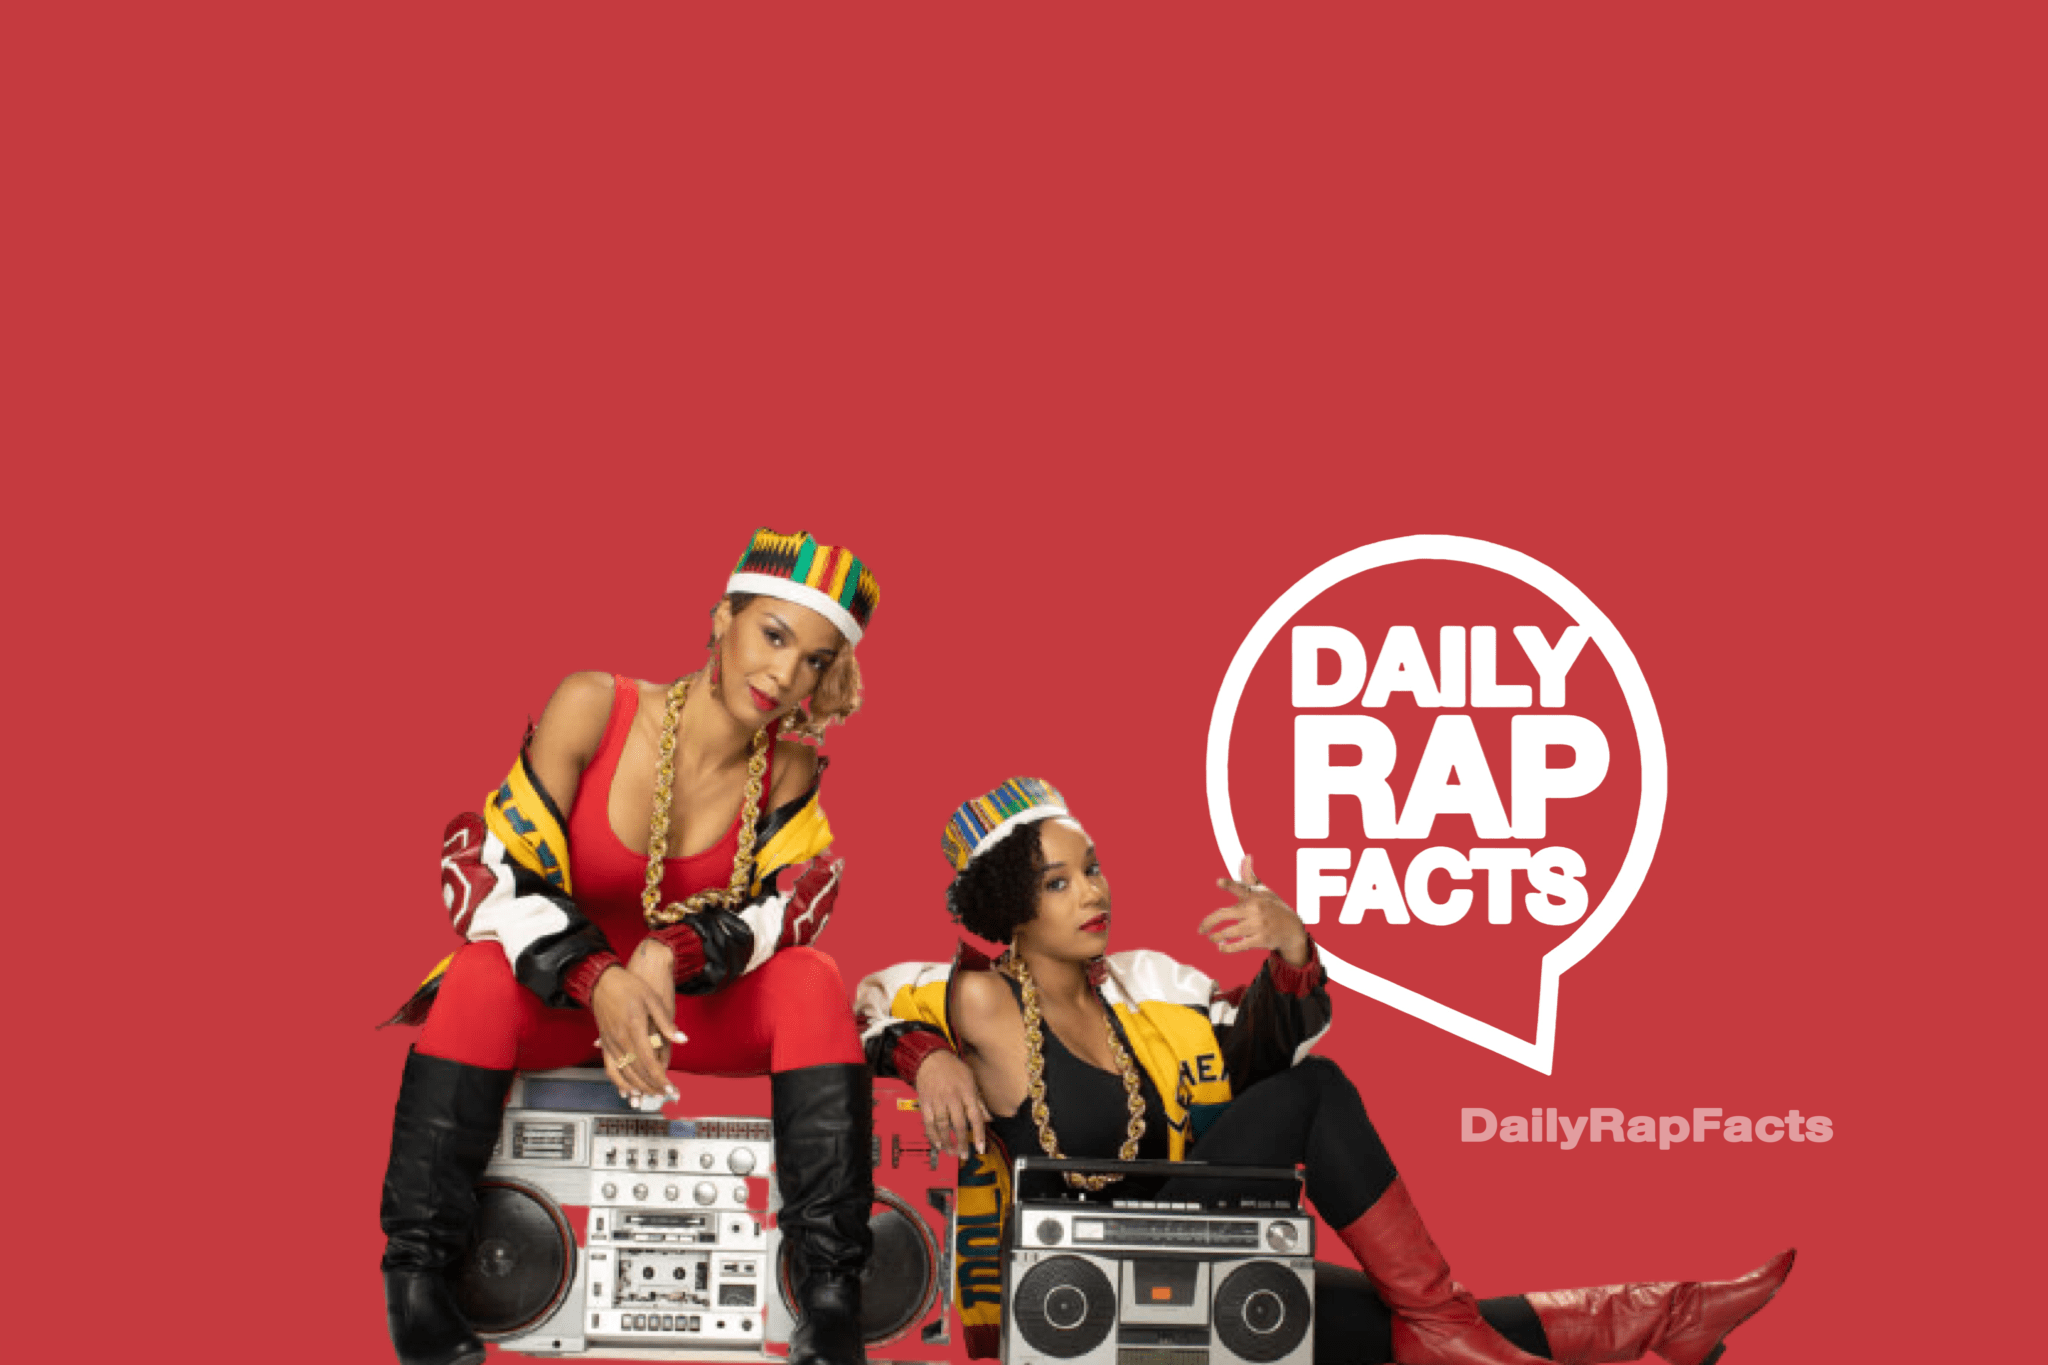 Salt-N-Pepa's first rap name as a duo was Super Nature